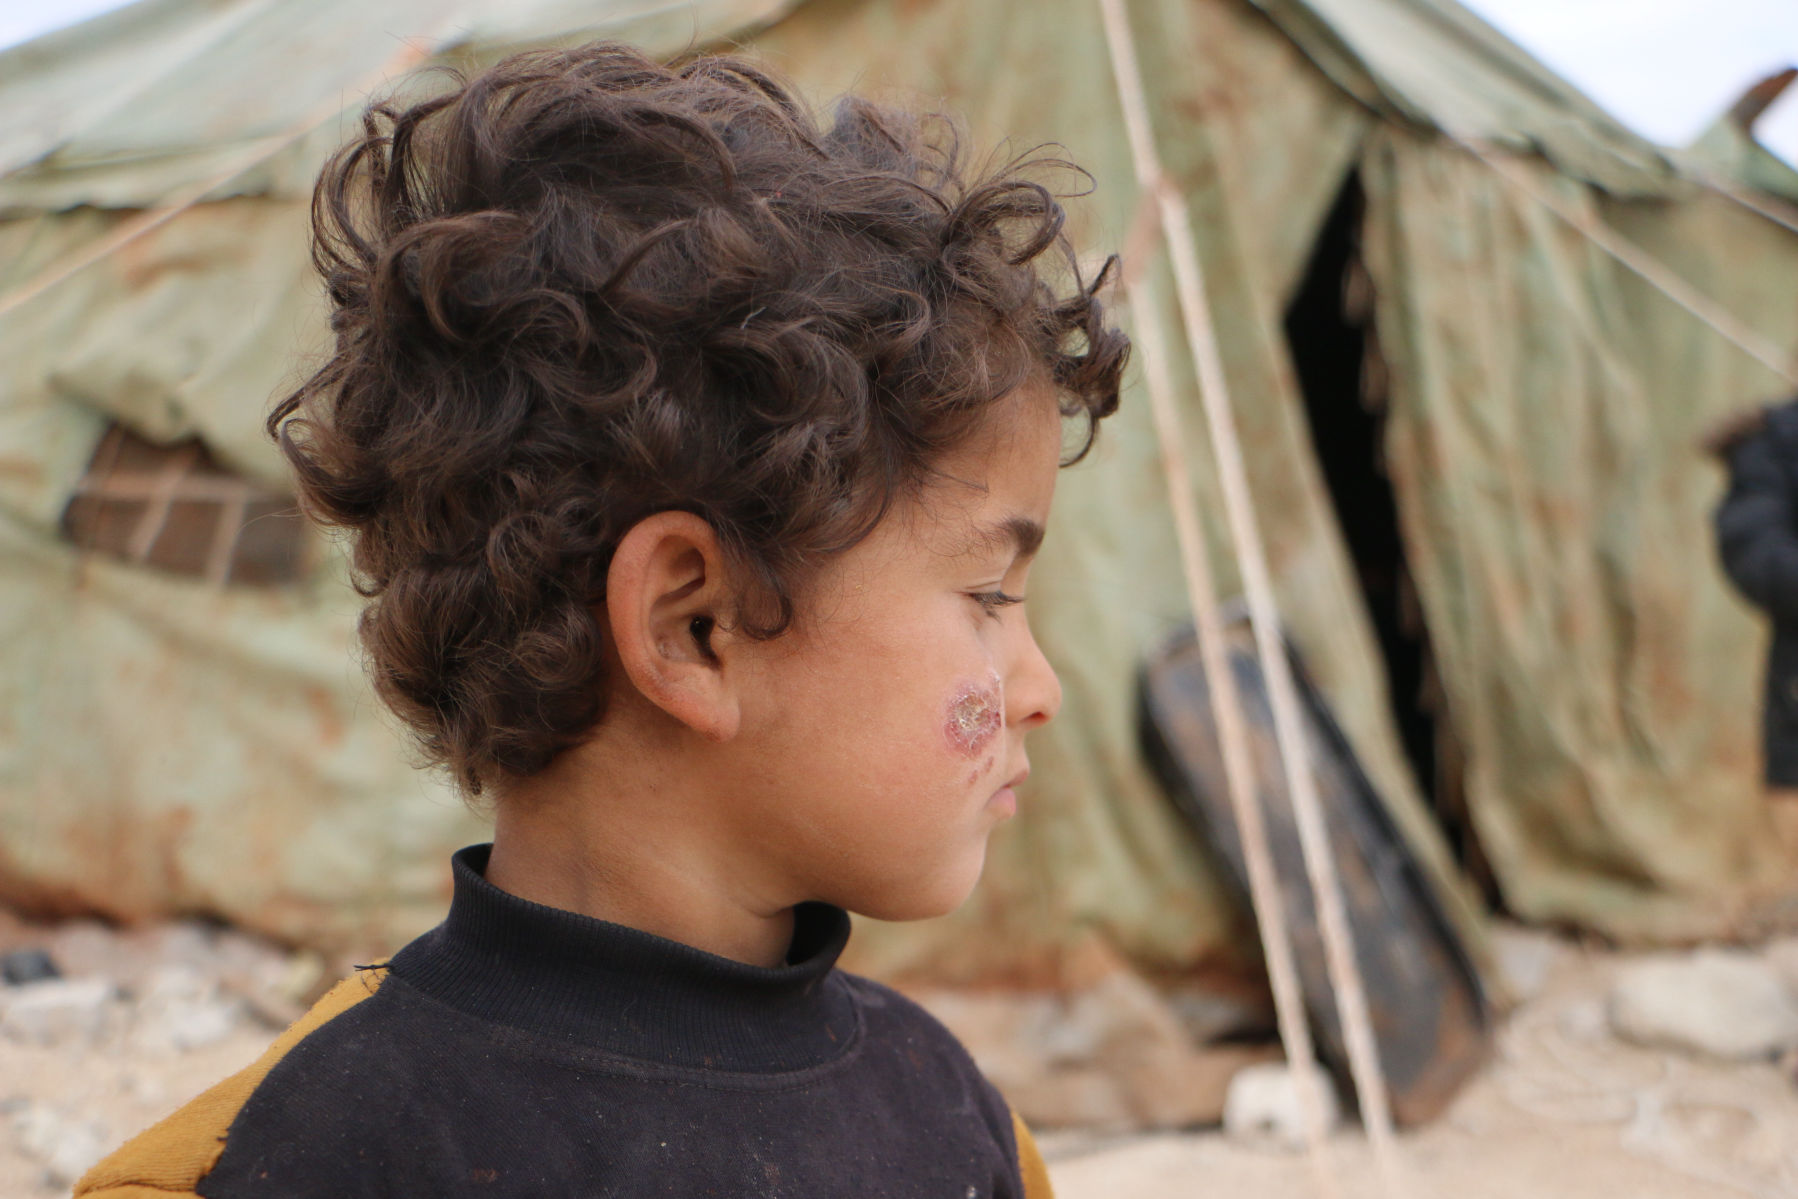 Un cas de leishmaniose cutanée dans le camp de Deir Hassan, en Syrie. Photo : Abdul Majeed Al Qareh.